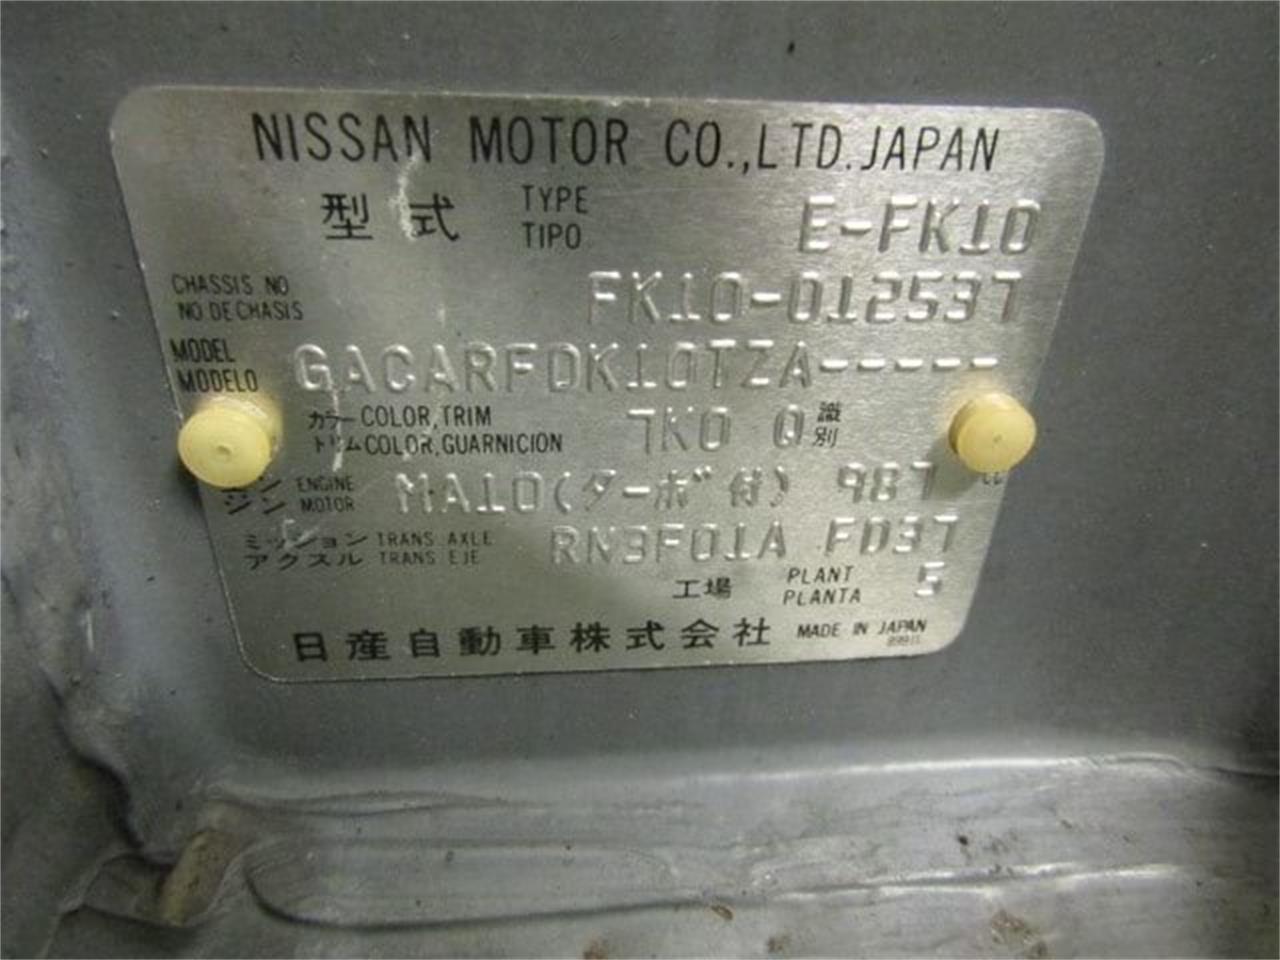 1991 Nissan Figaro for sale in Christiansburg, VA – photo 45